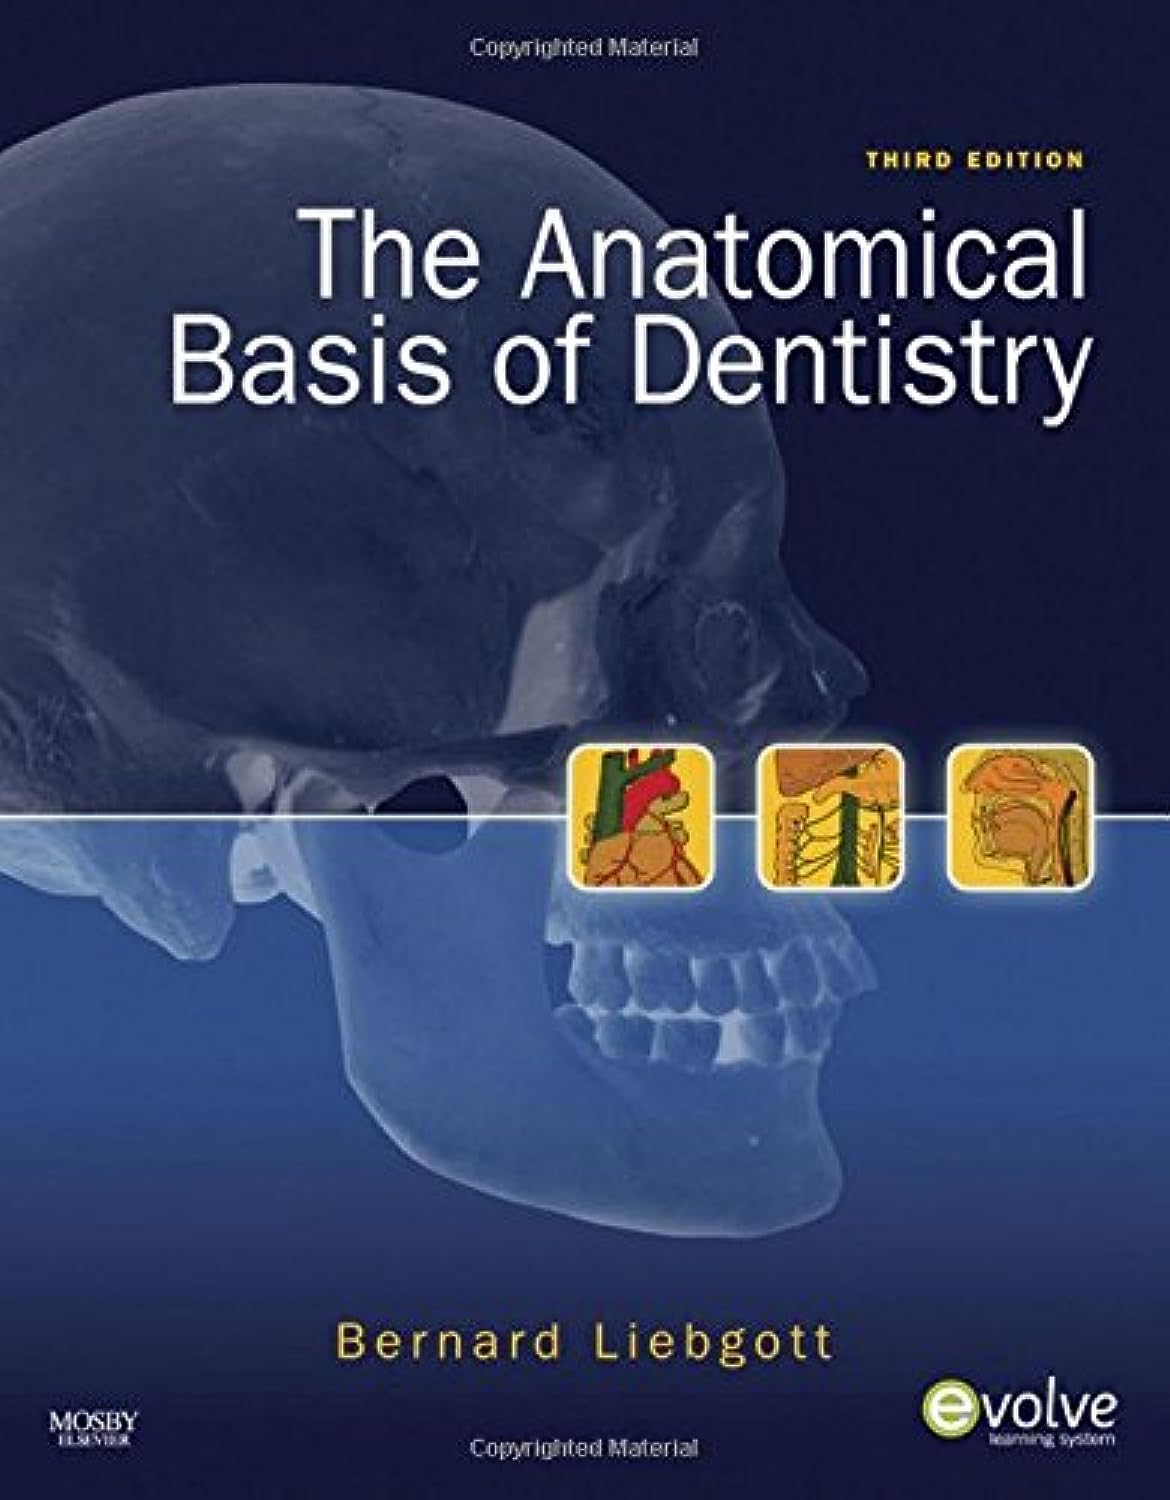 The Anatomical Basis of Dentistry by Bernard Liebgott (Author)